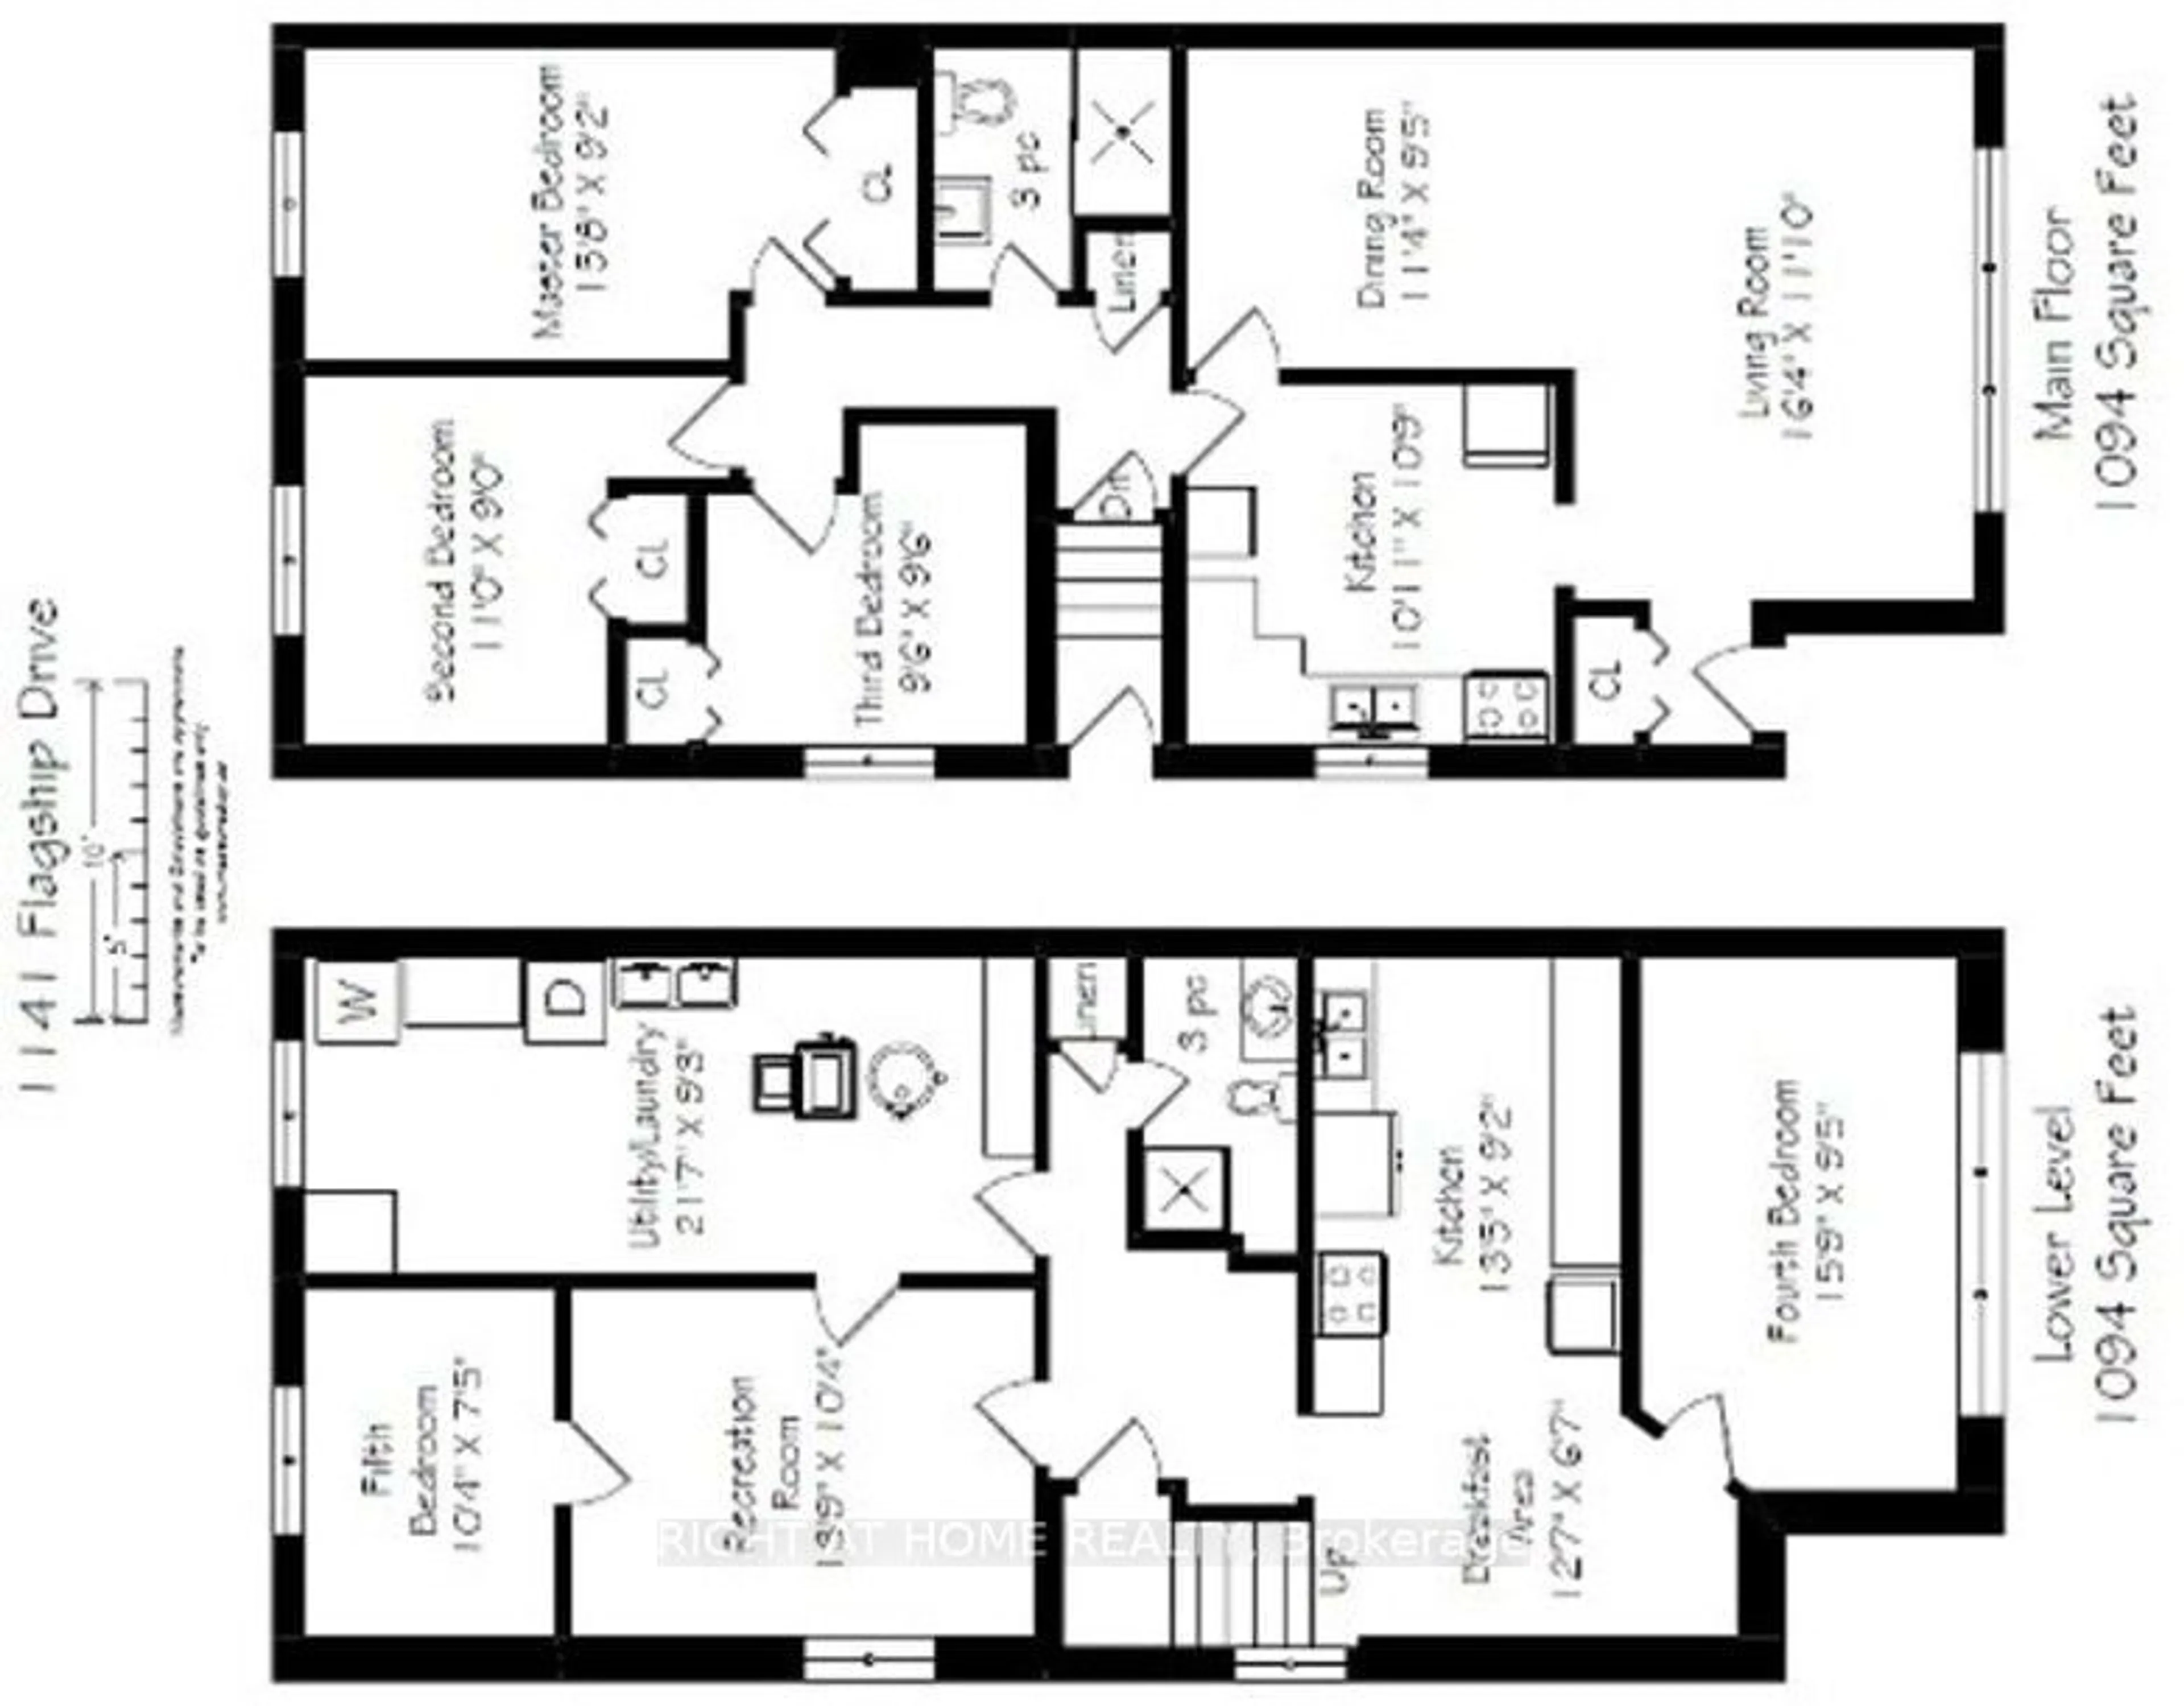 Floor plan for 1141 Flagship Dr, Mississauga Ontario L4Y 2K3